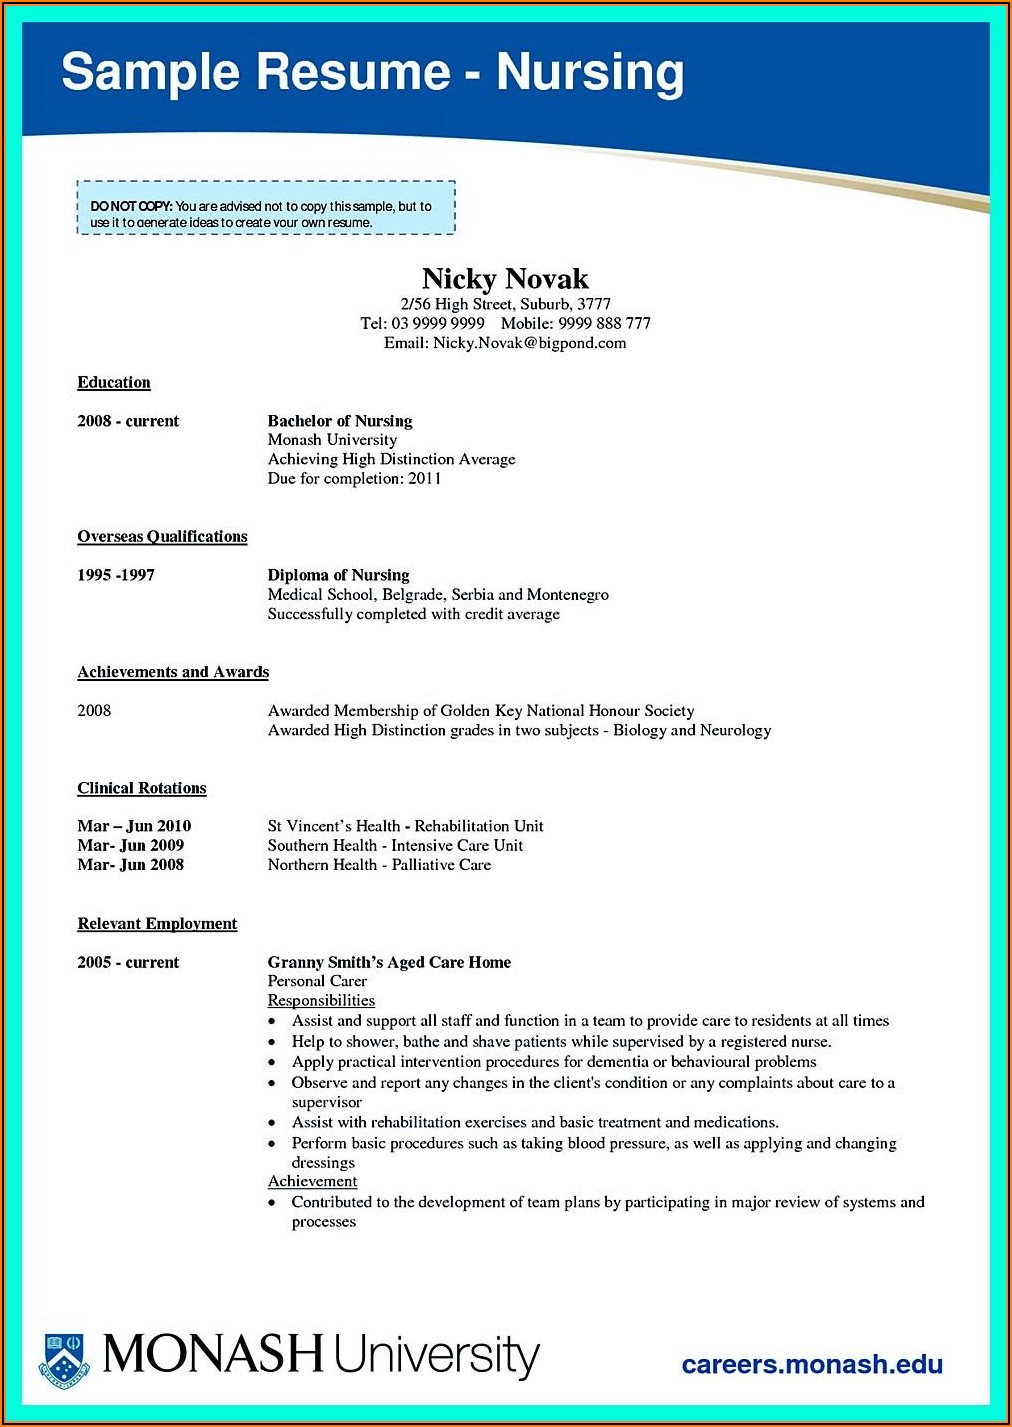 Resume Example For Nurses